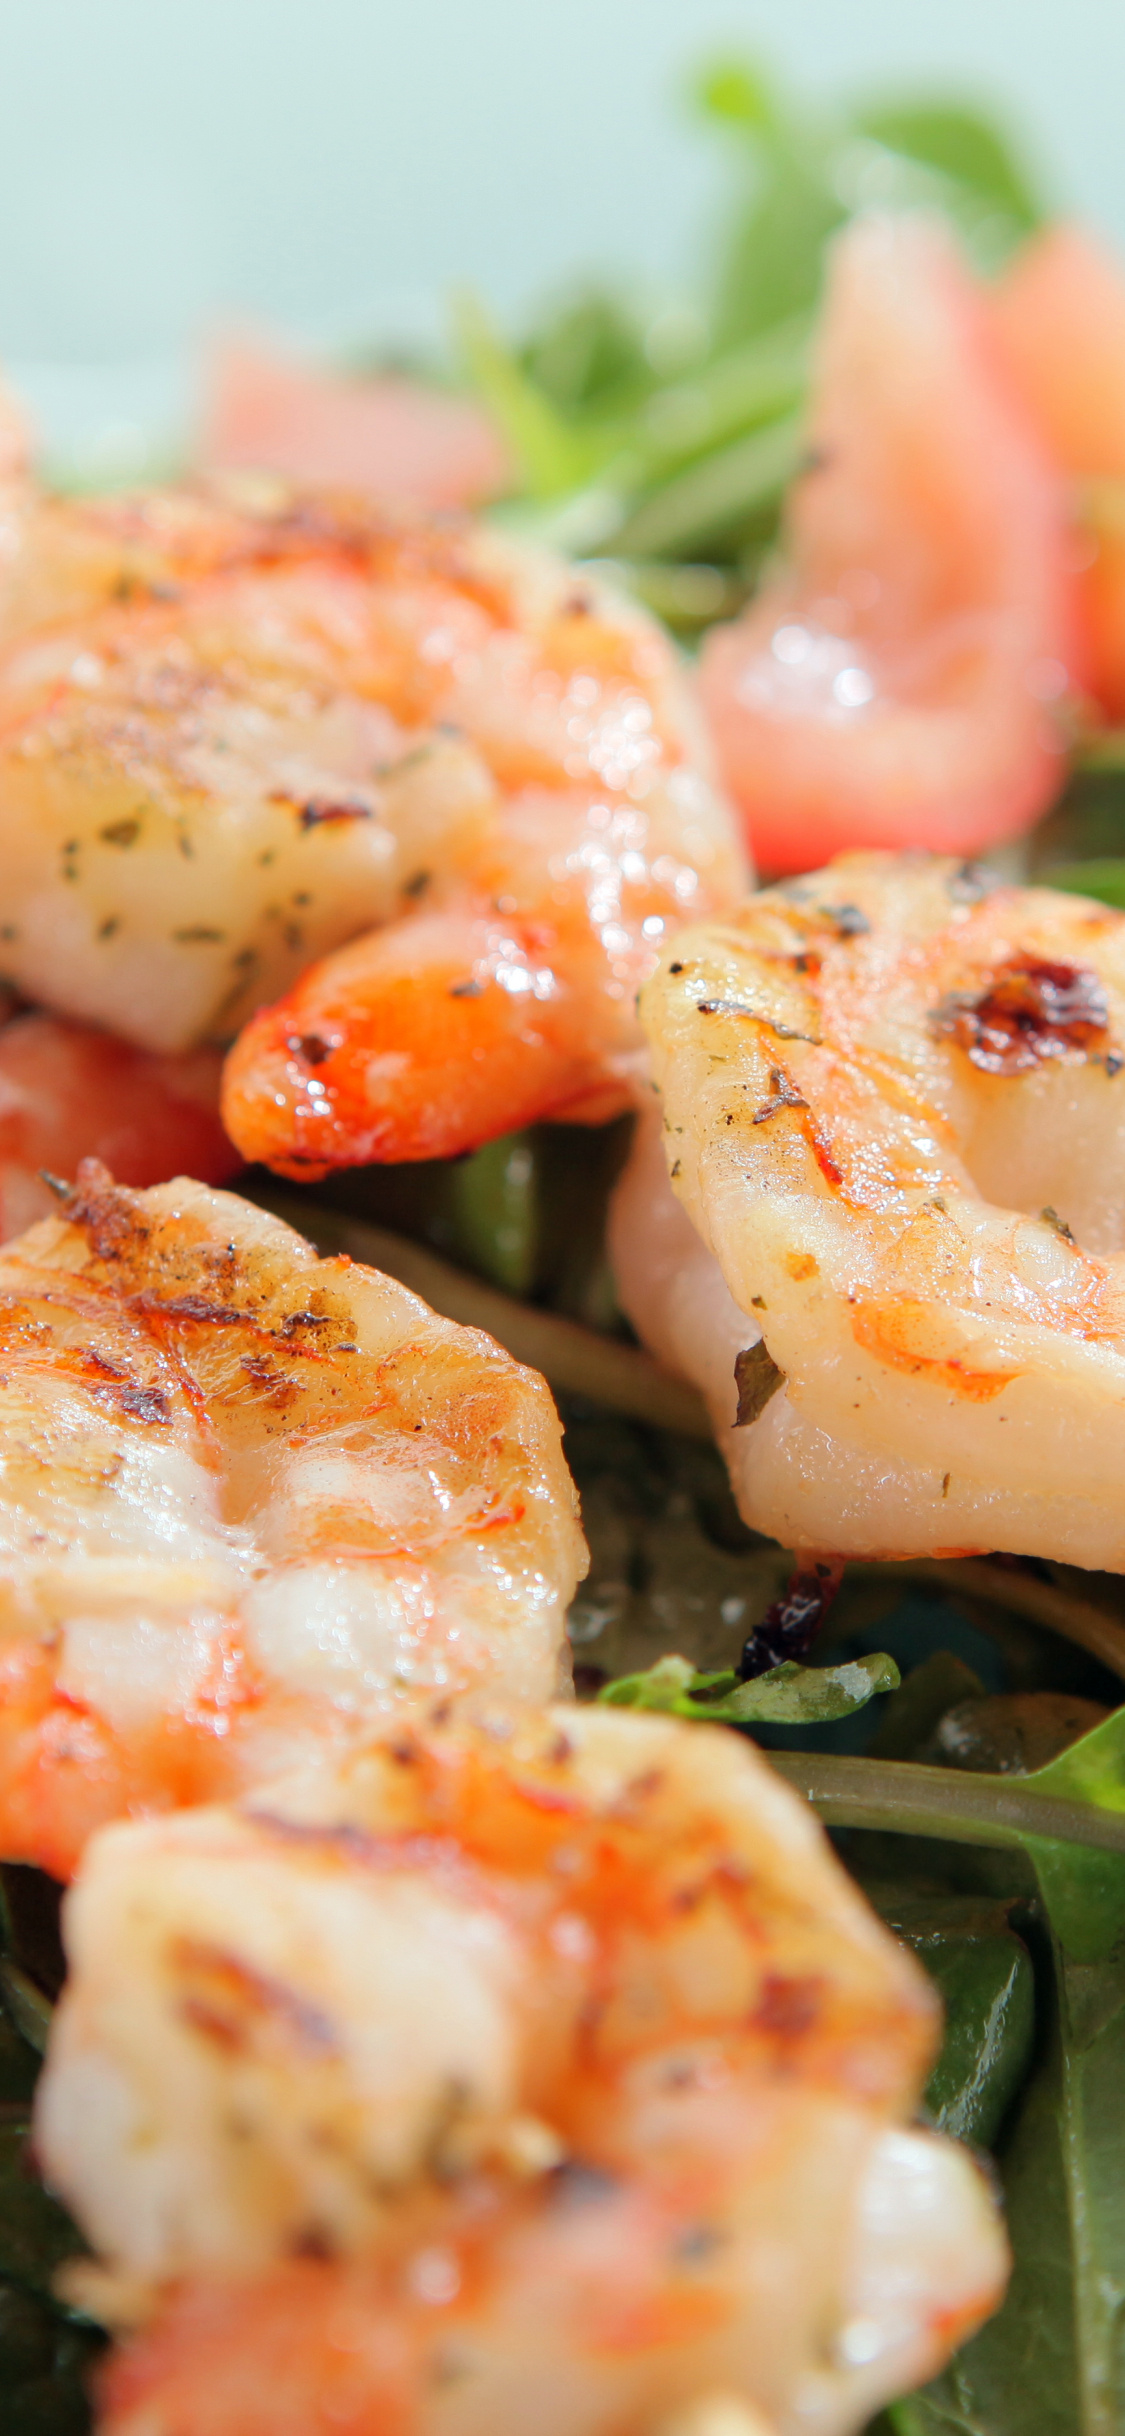 Seafood: Grilled shrimp skewers, marinated in garlic, lemon and herbs. 1130x2440 HD Wallpaper.